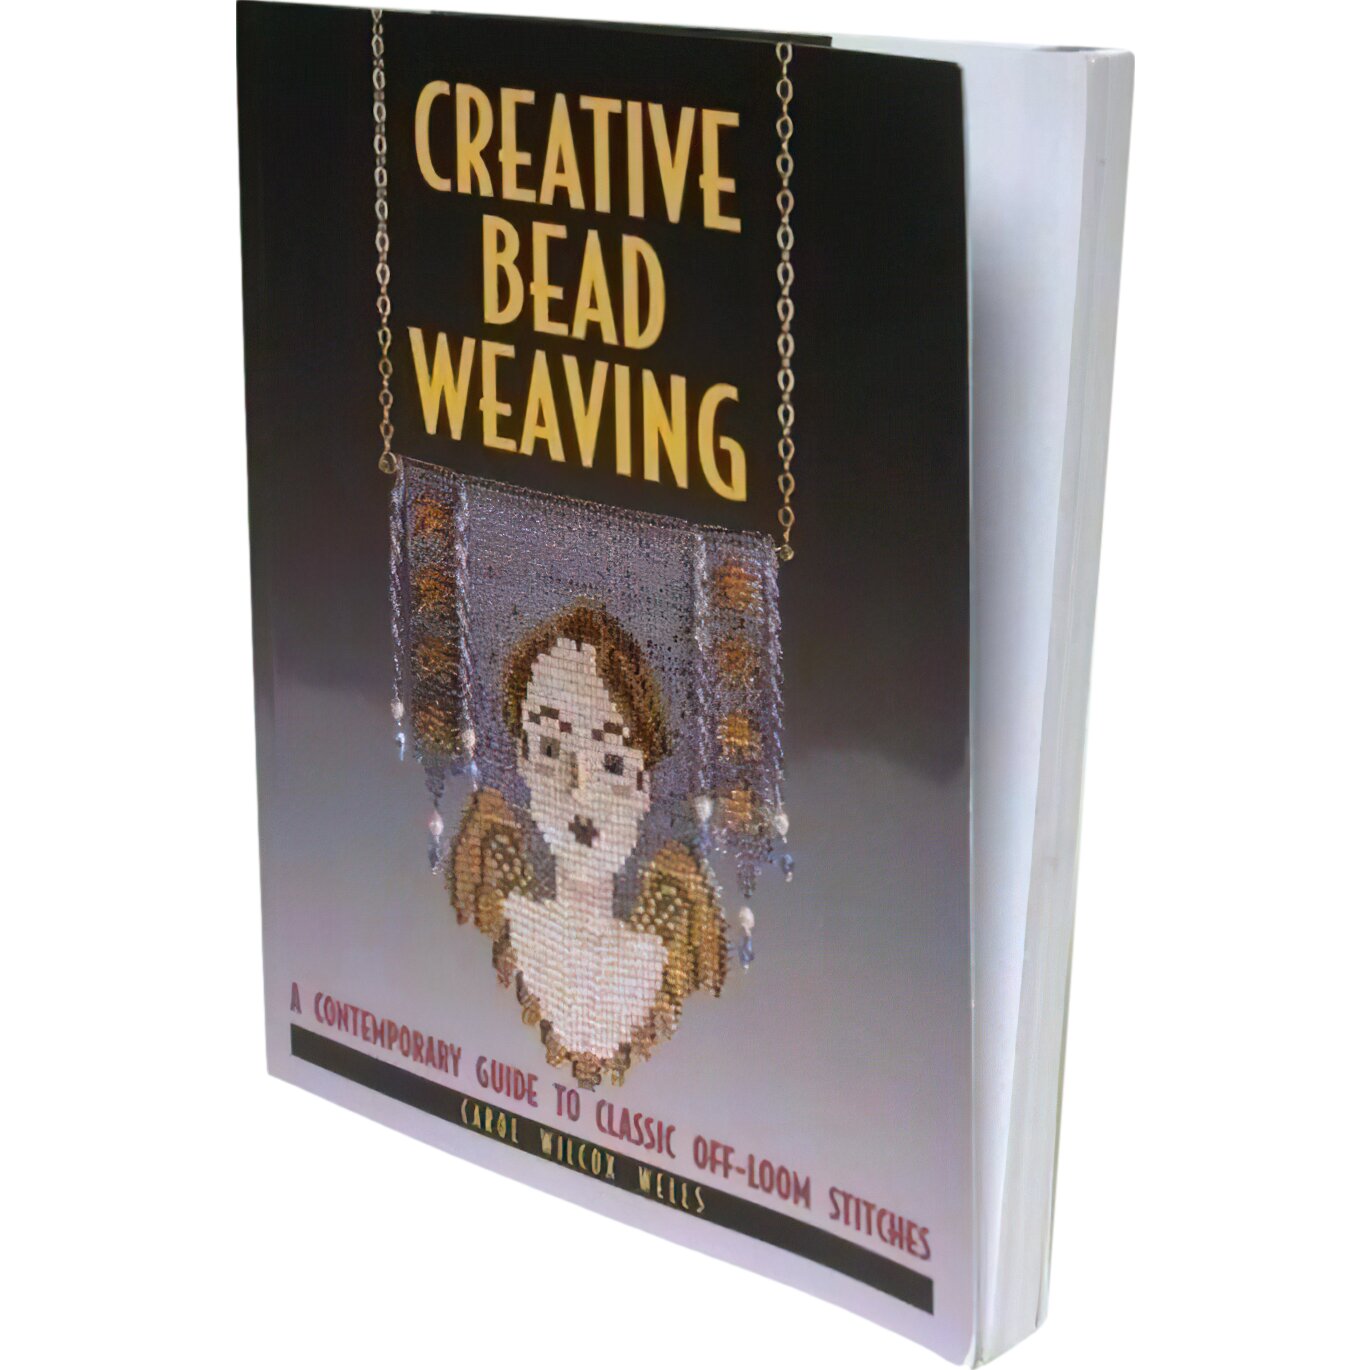 Creative Bead Weaving by Carol Wilcox Wells